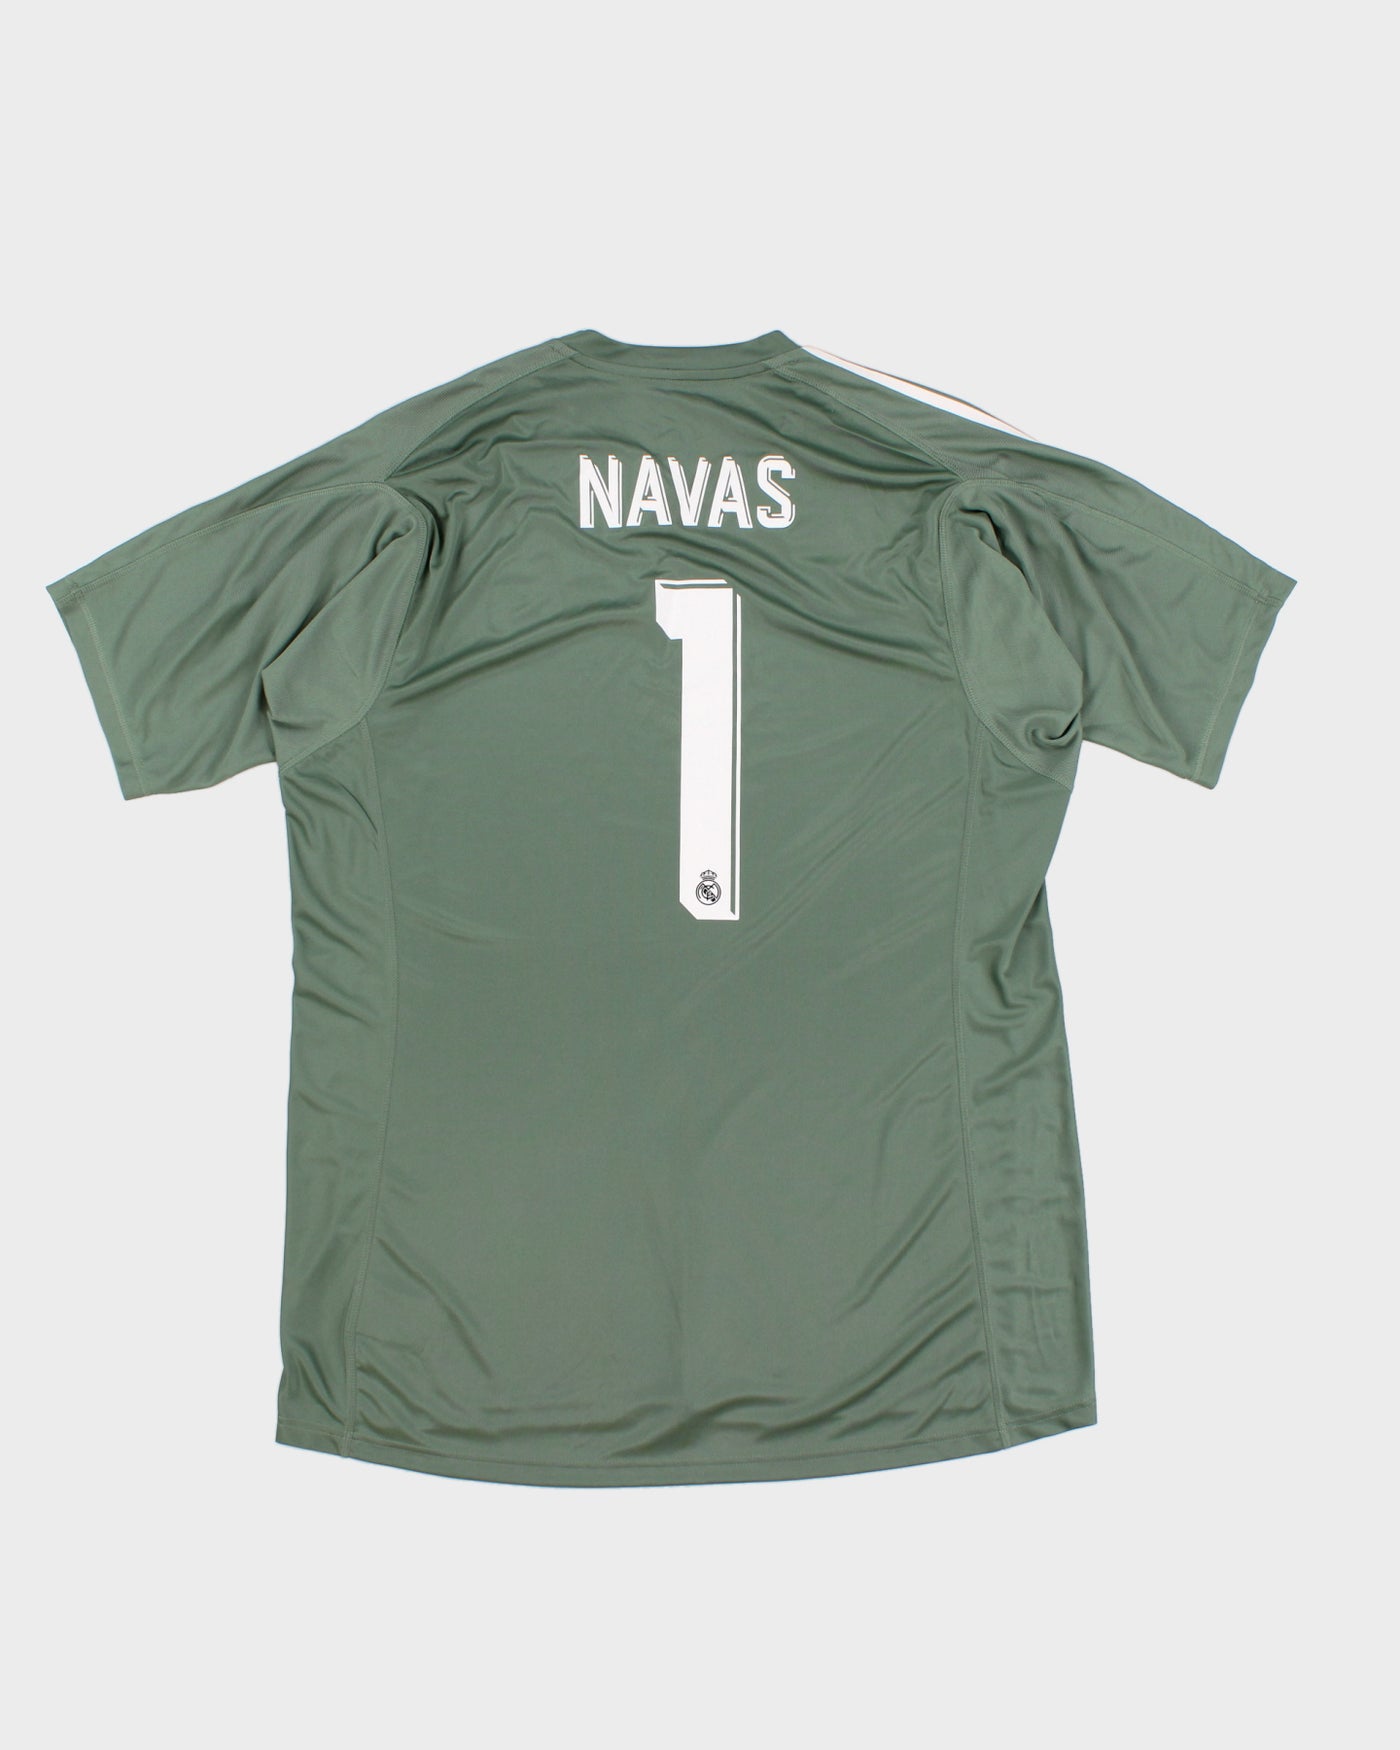 Real Madrid Adidas Keylor Navas #1 Football Shirt